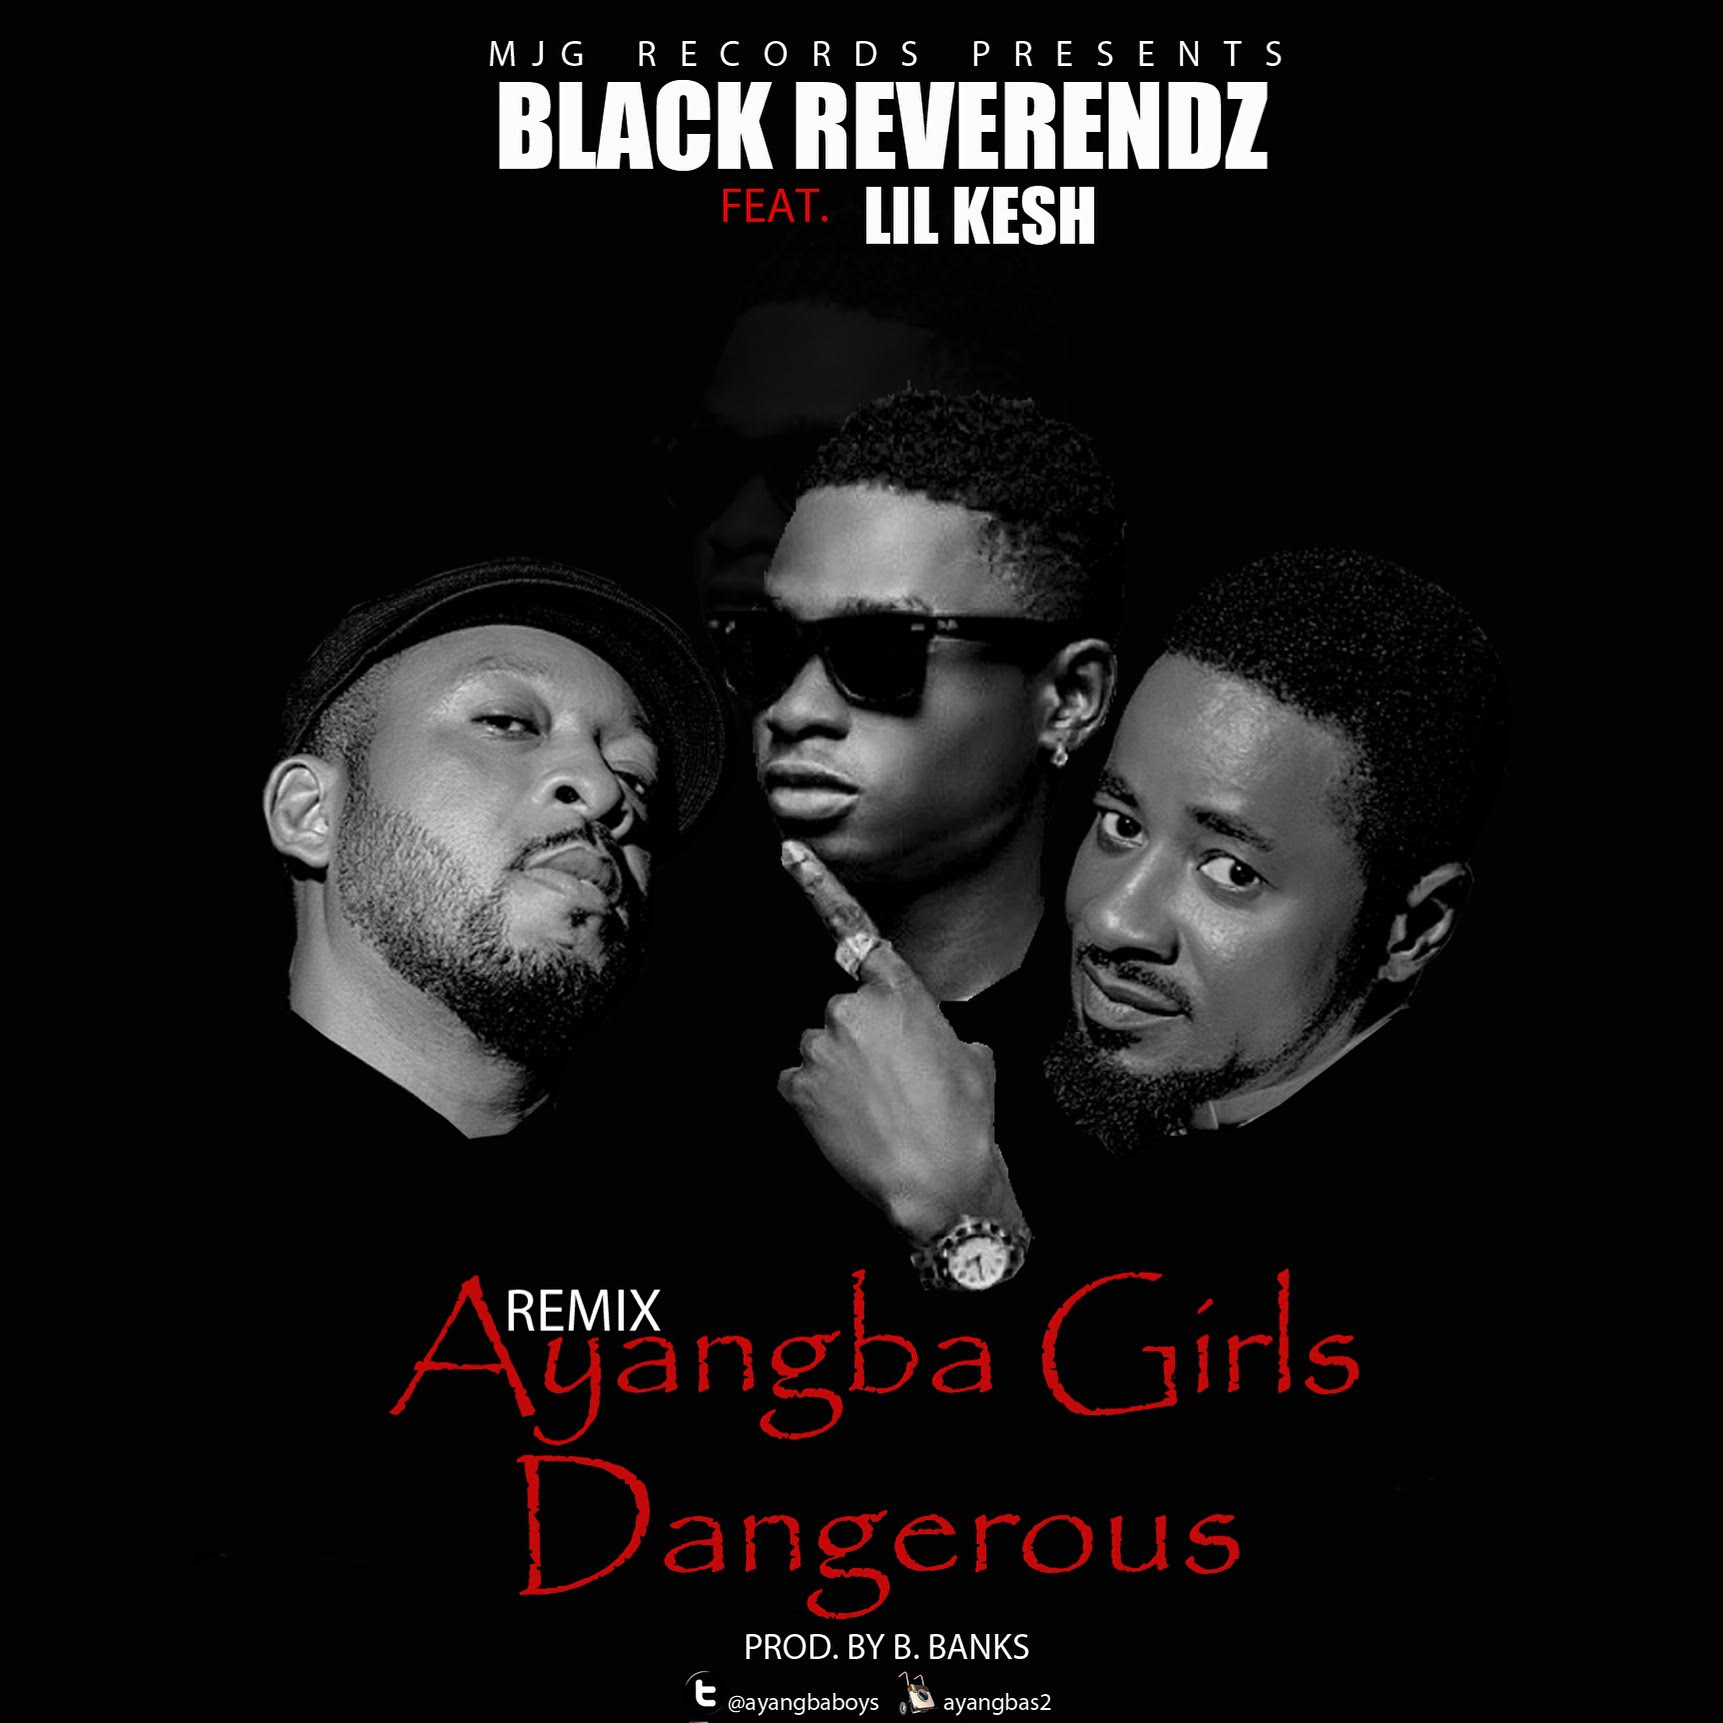 black-reverendz-ft-lil-kesh-ayangba-girl-dangerous-remix